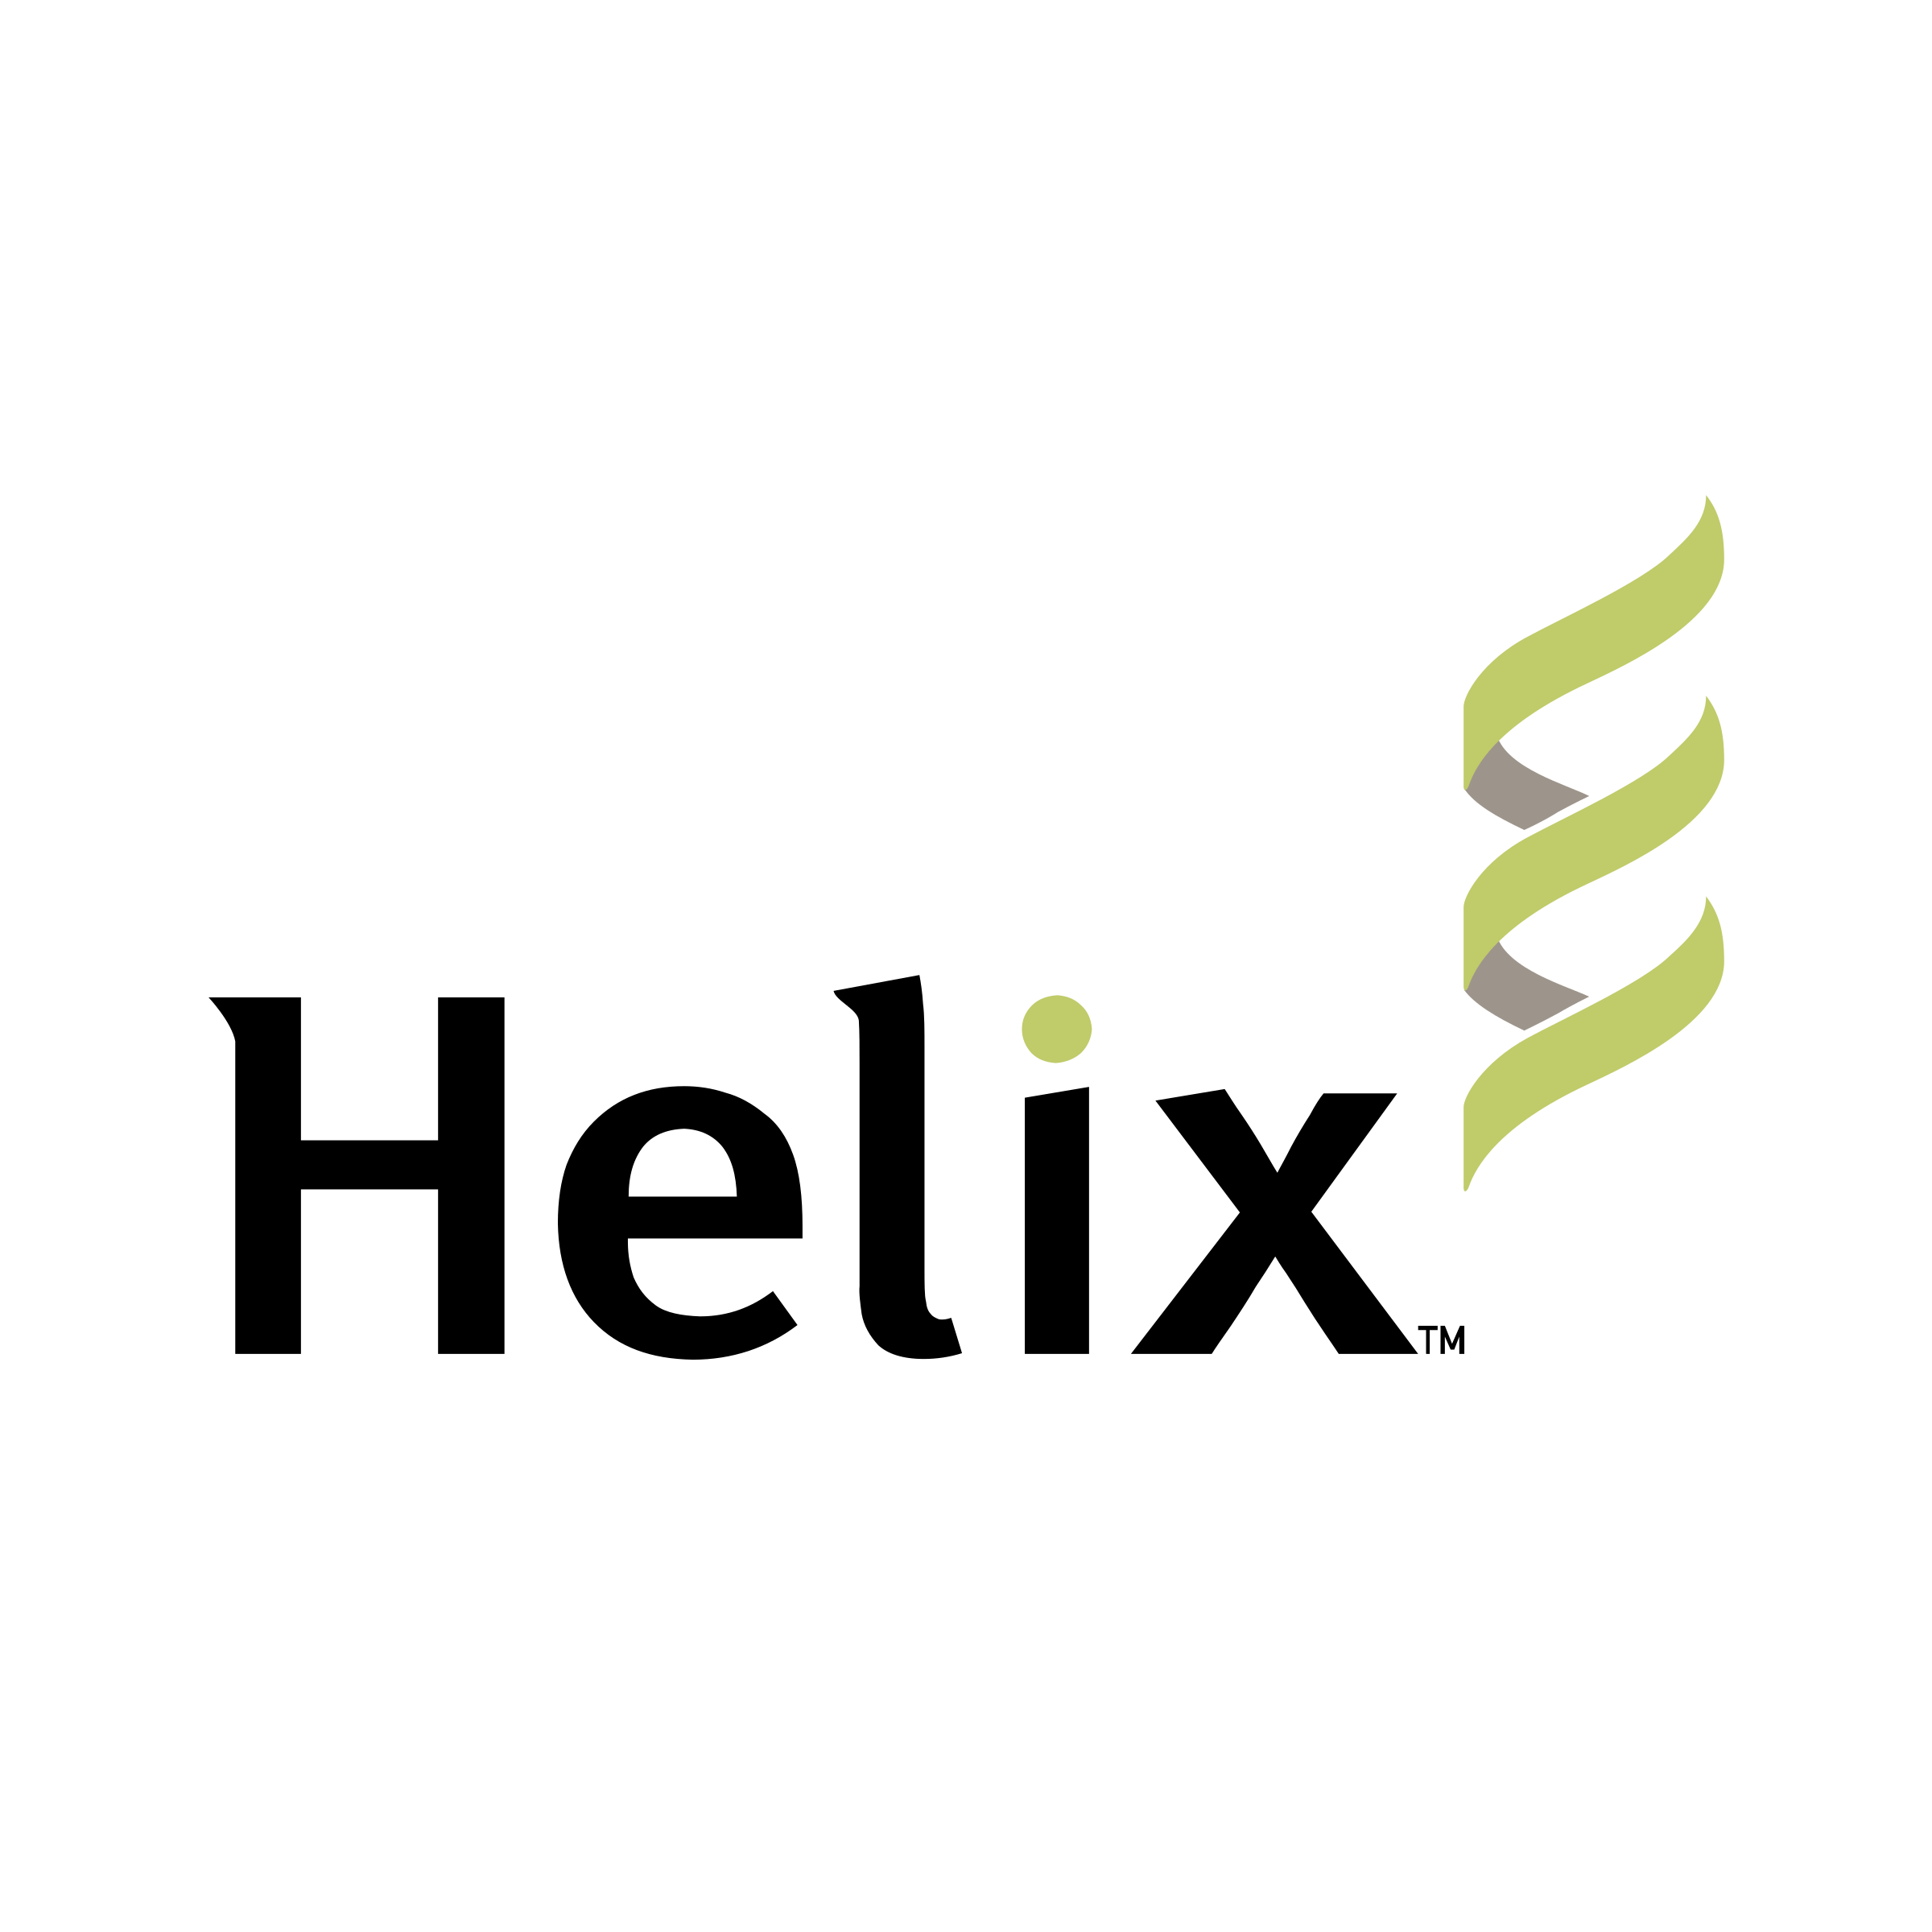 Helix Logo - Helix Logo PNG Transparent & SVG Vector - Freebie Supply